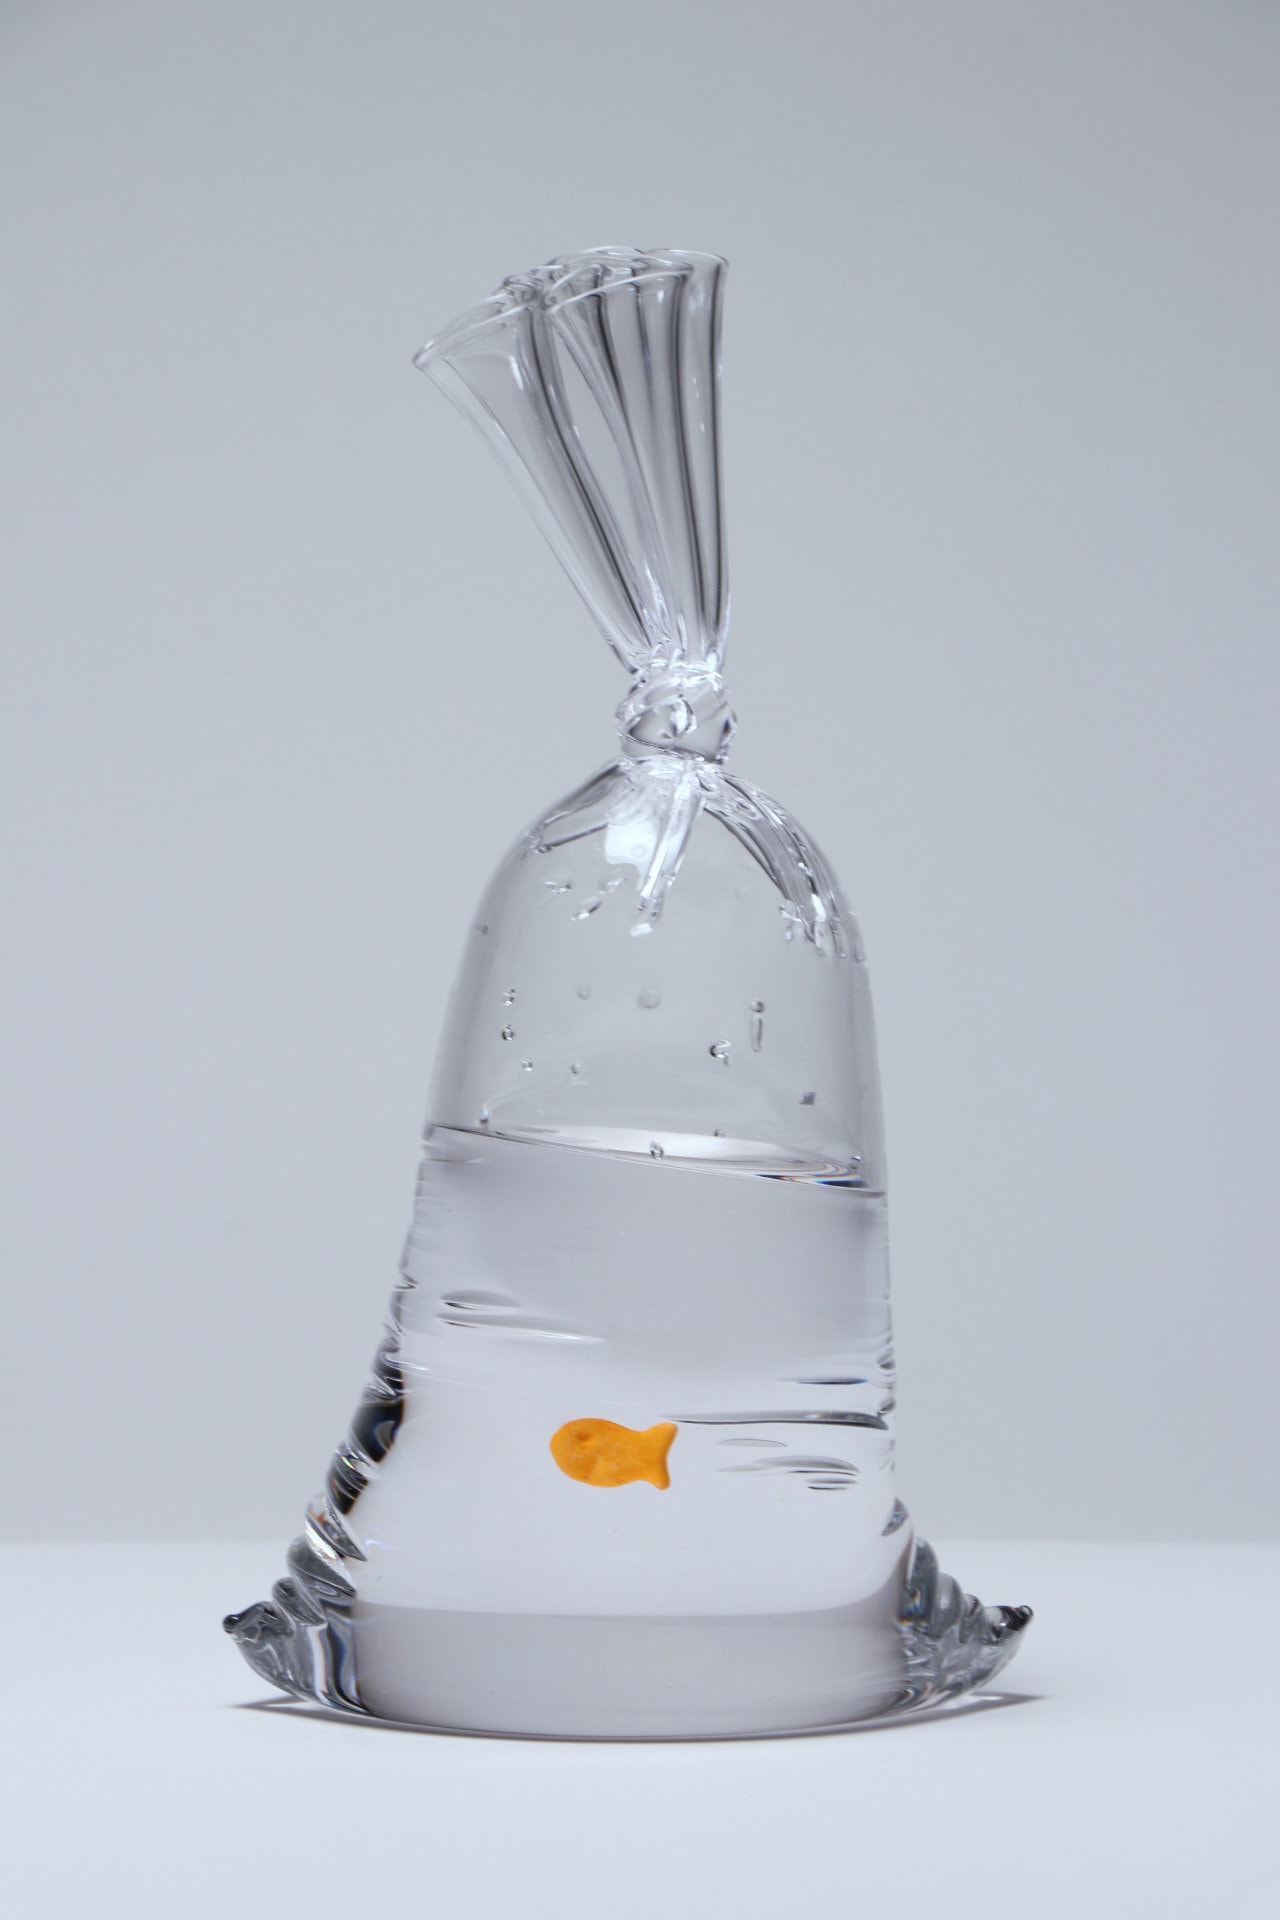 waterbag with goldfish cracker